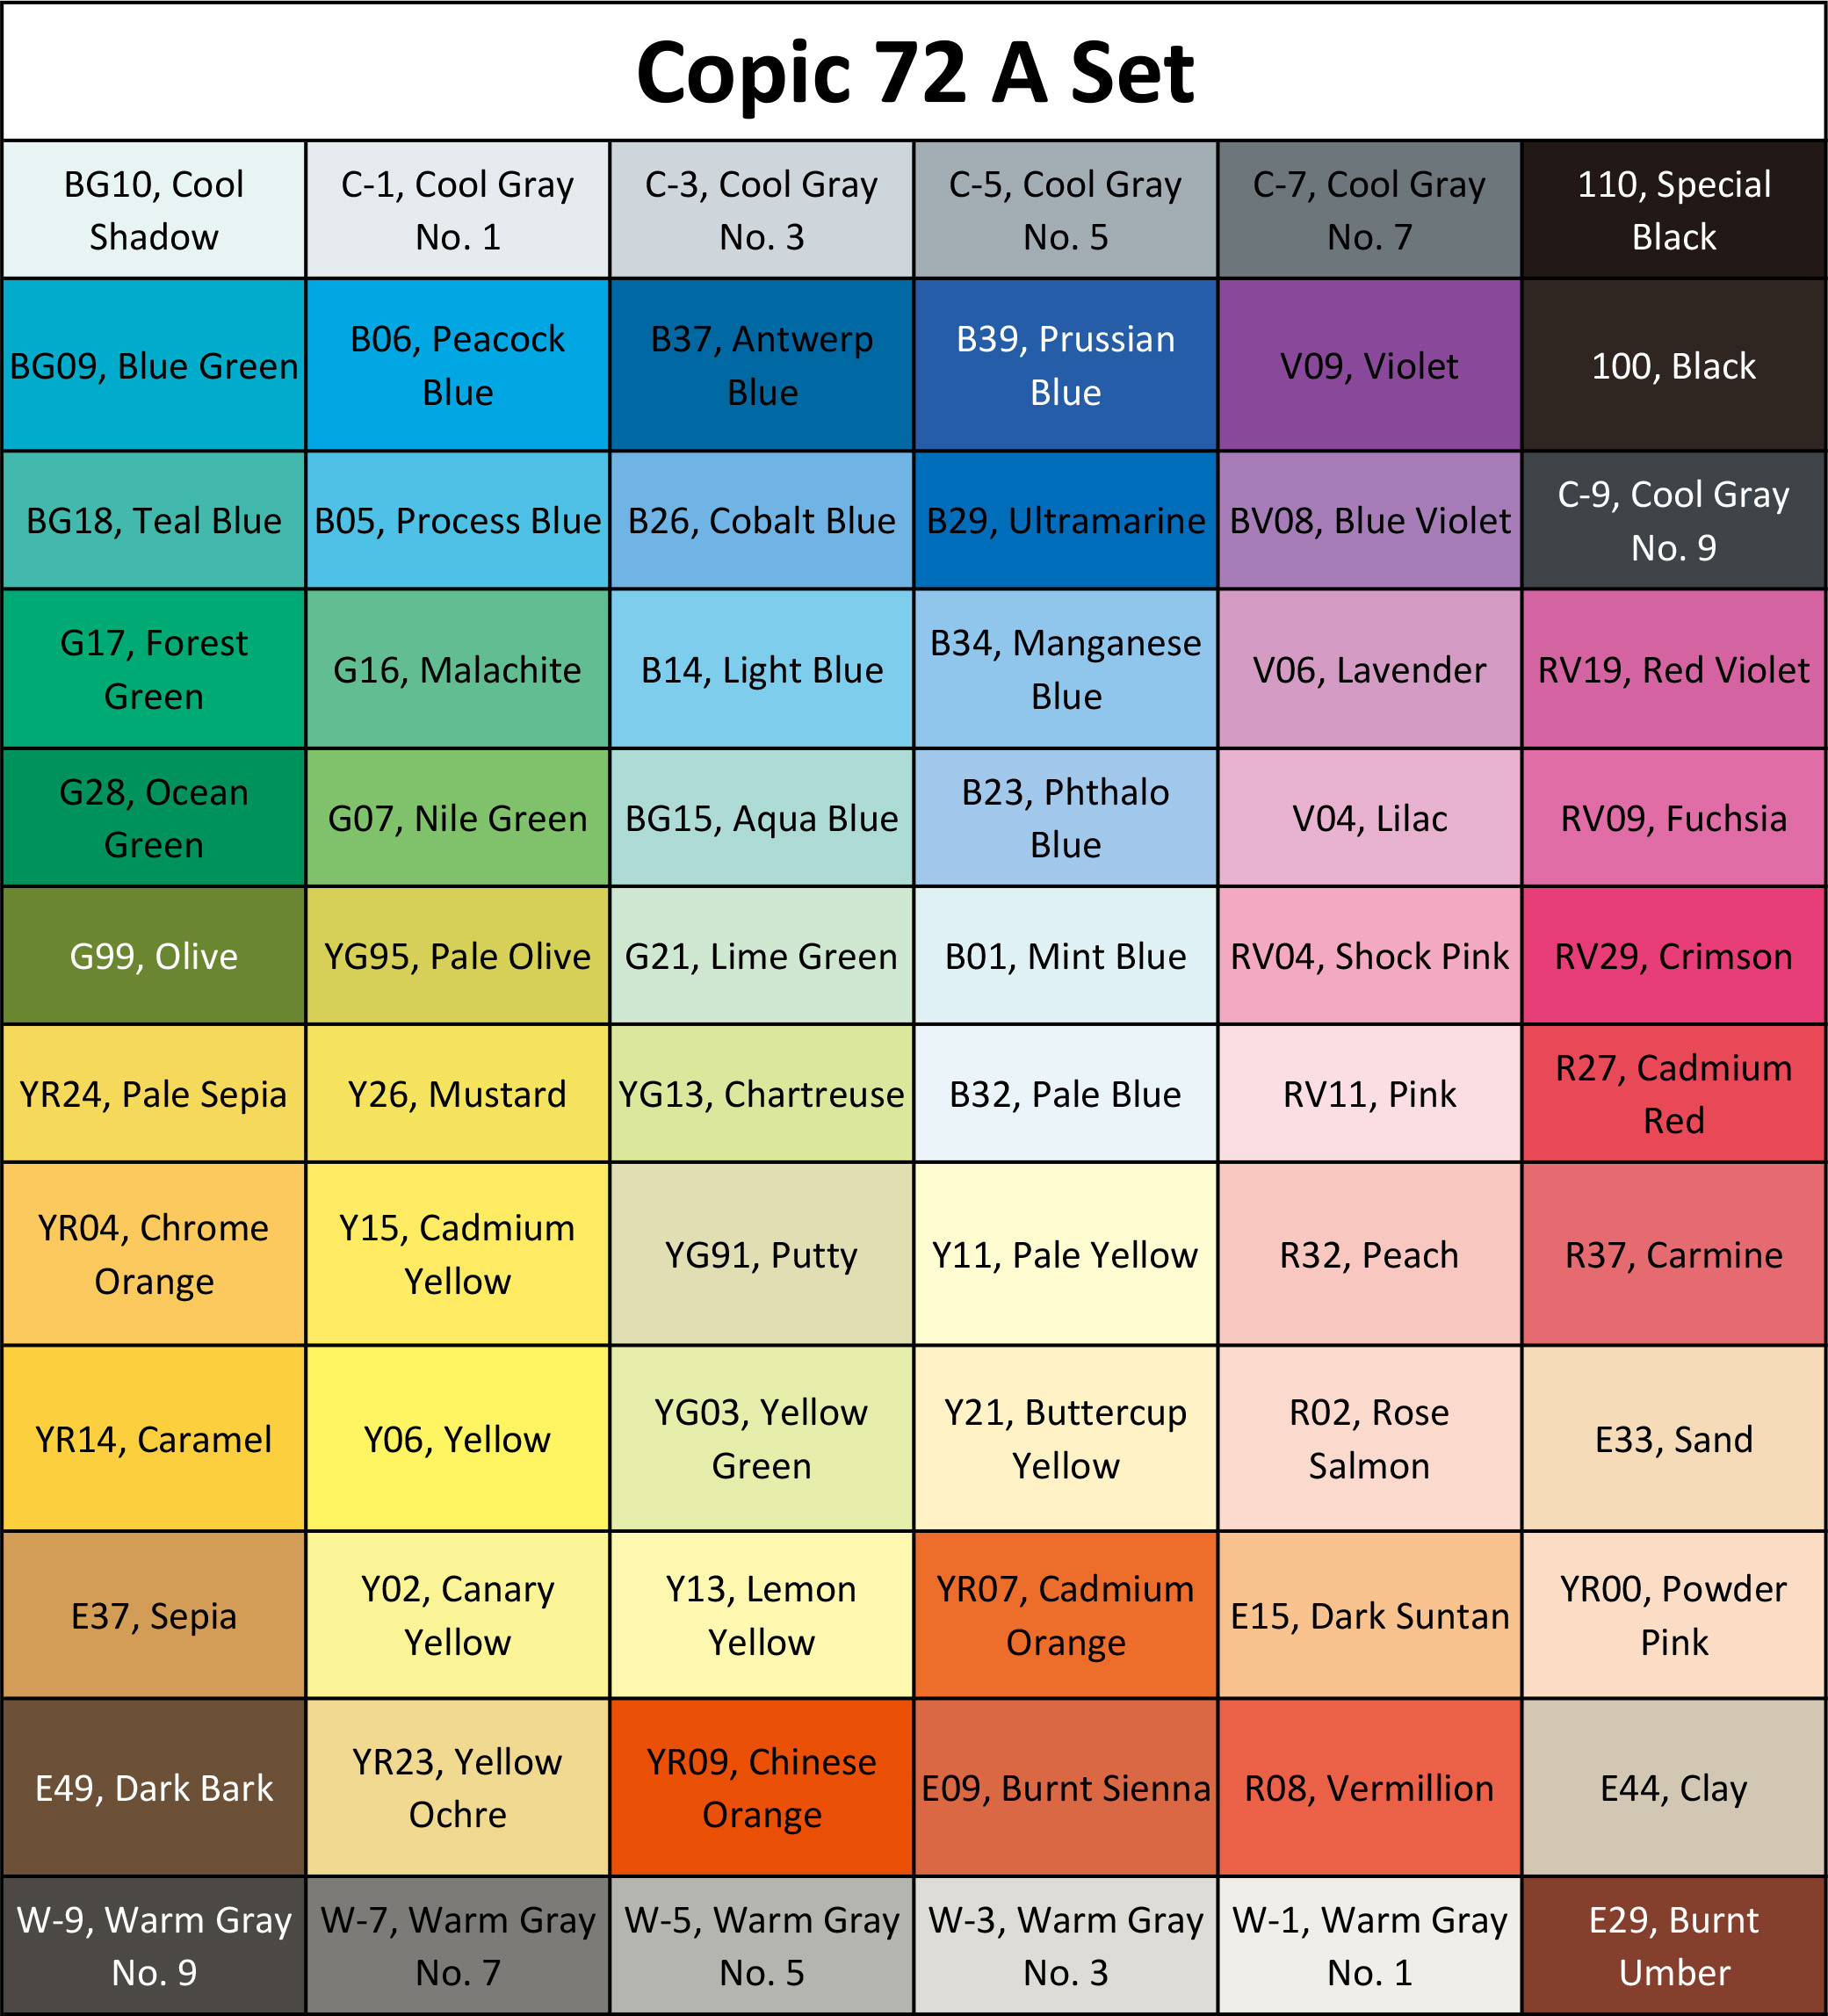 I Like Markers: Helpful Color Chart